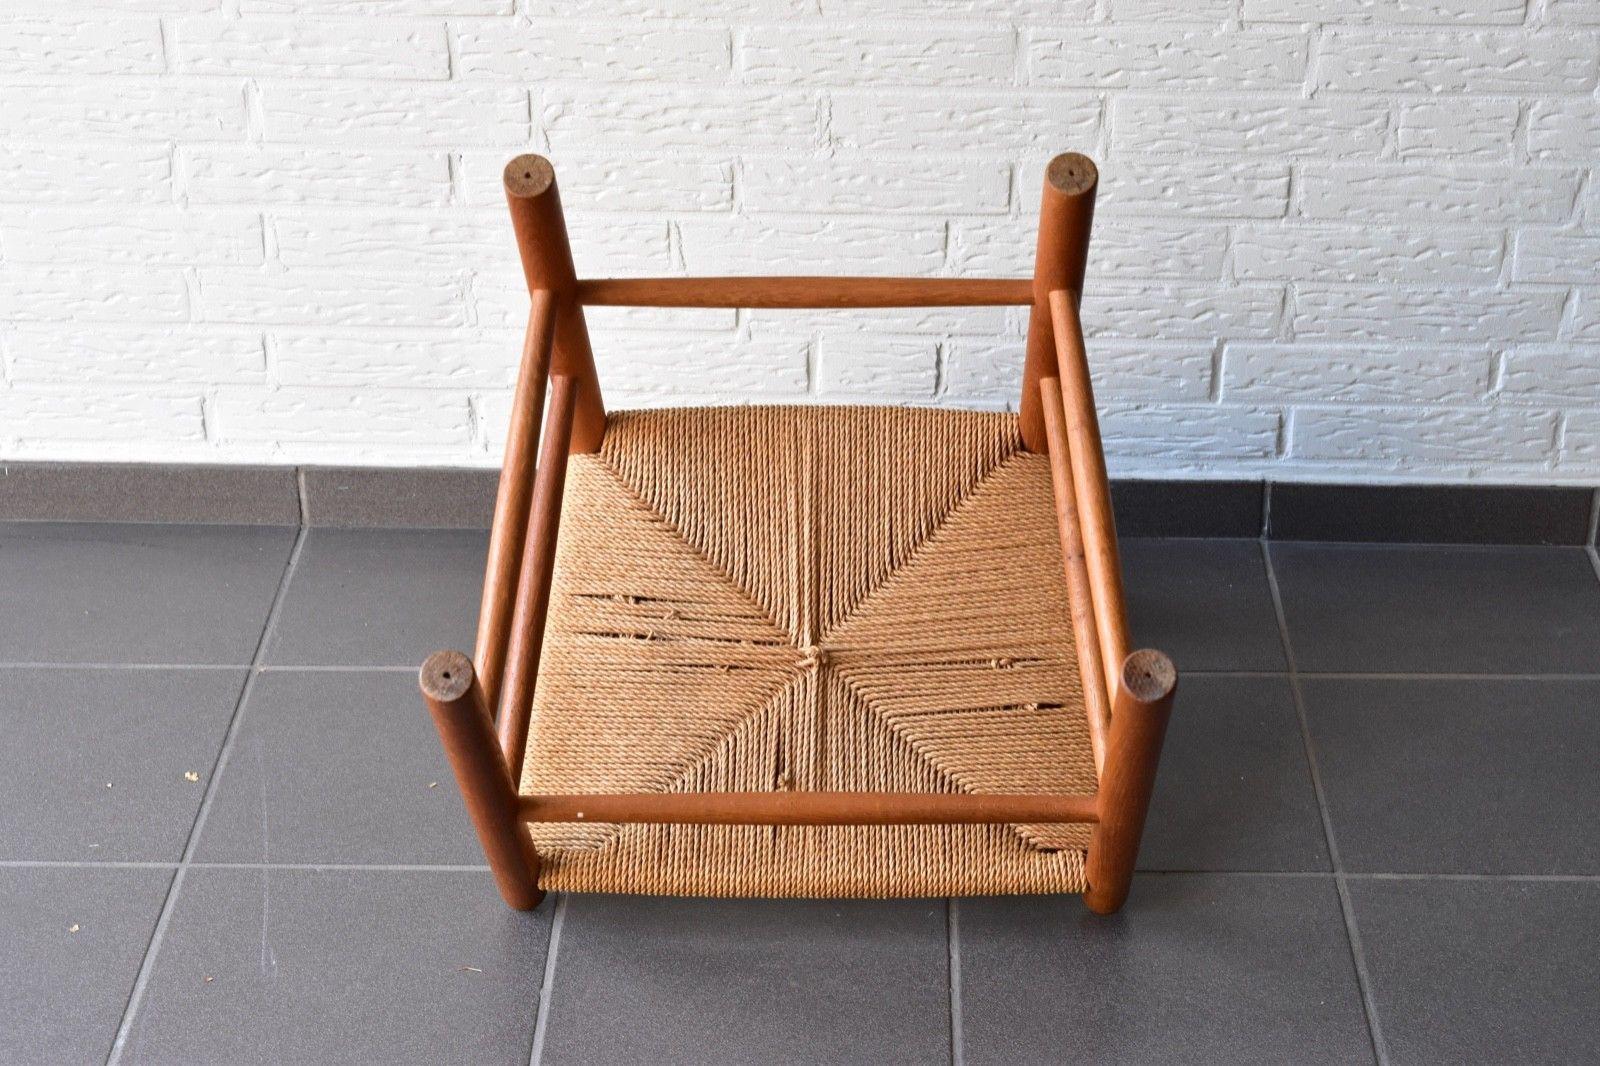 20th Century Vintage Oak Børge Mogensen Chairs Produced by J39 FDB Møbler, Denmark